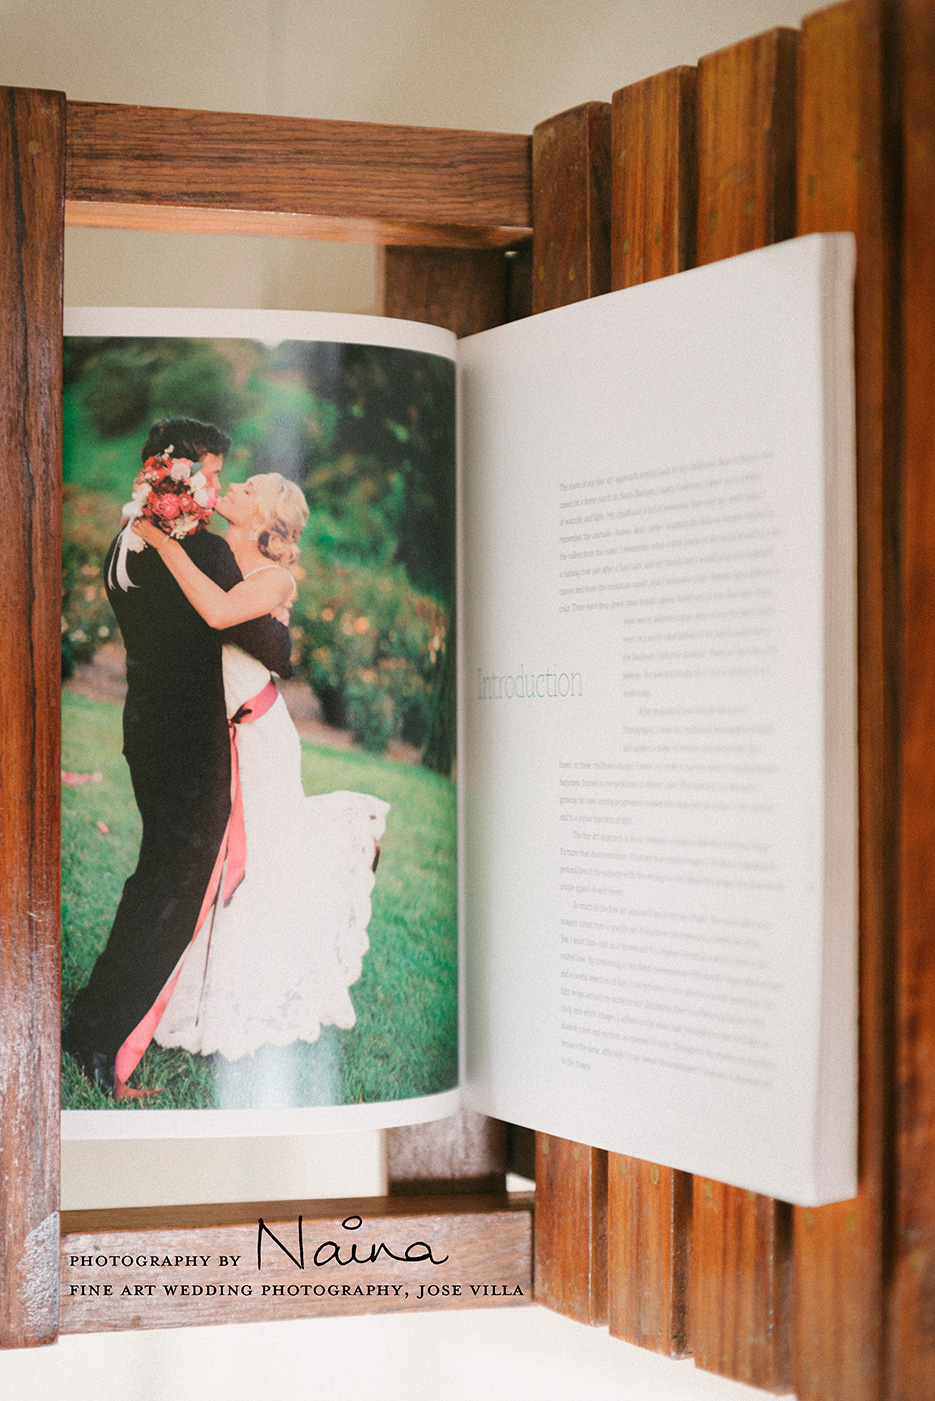 Fine Art Wedding Photography by Jose Villa & Jeff Kent. Photography Book Review. Photography by professional Indian lifestyle photographer Naina Redhu of Naina.co